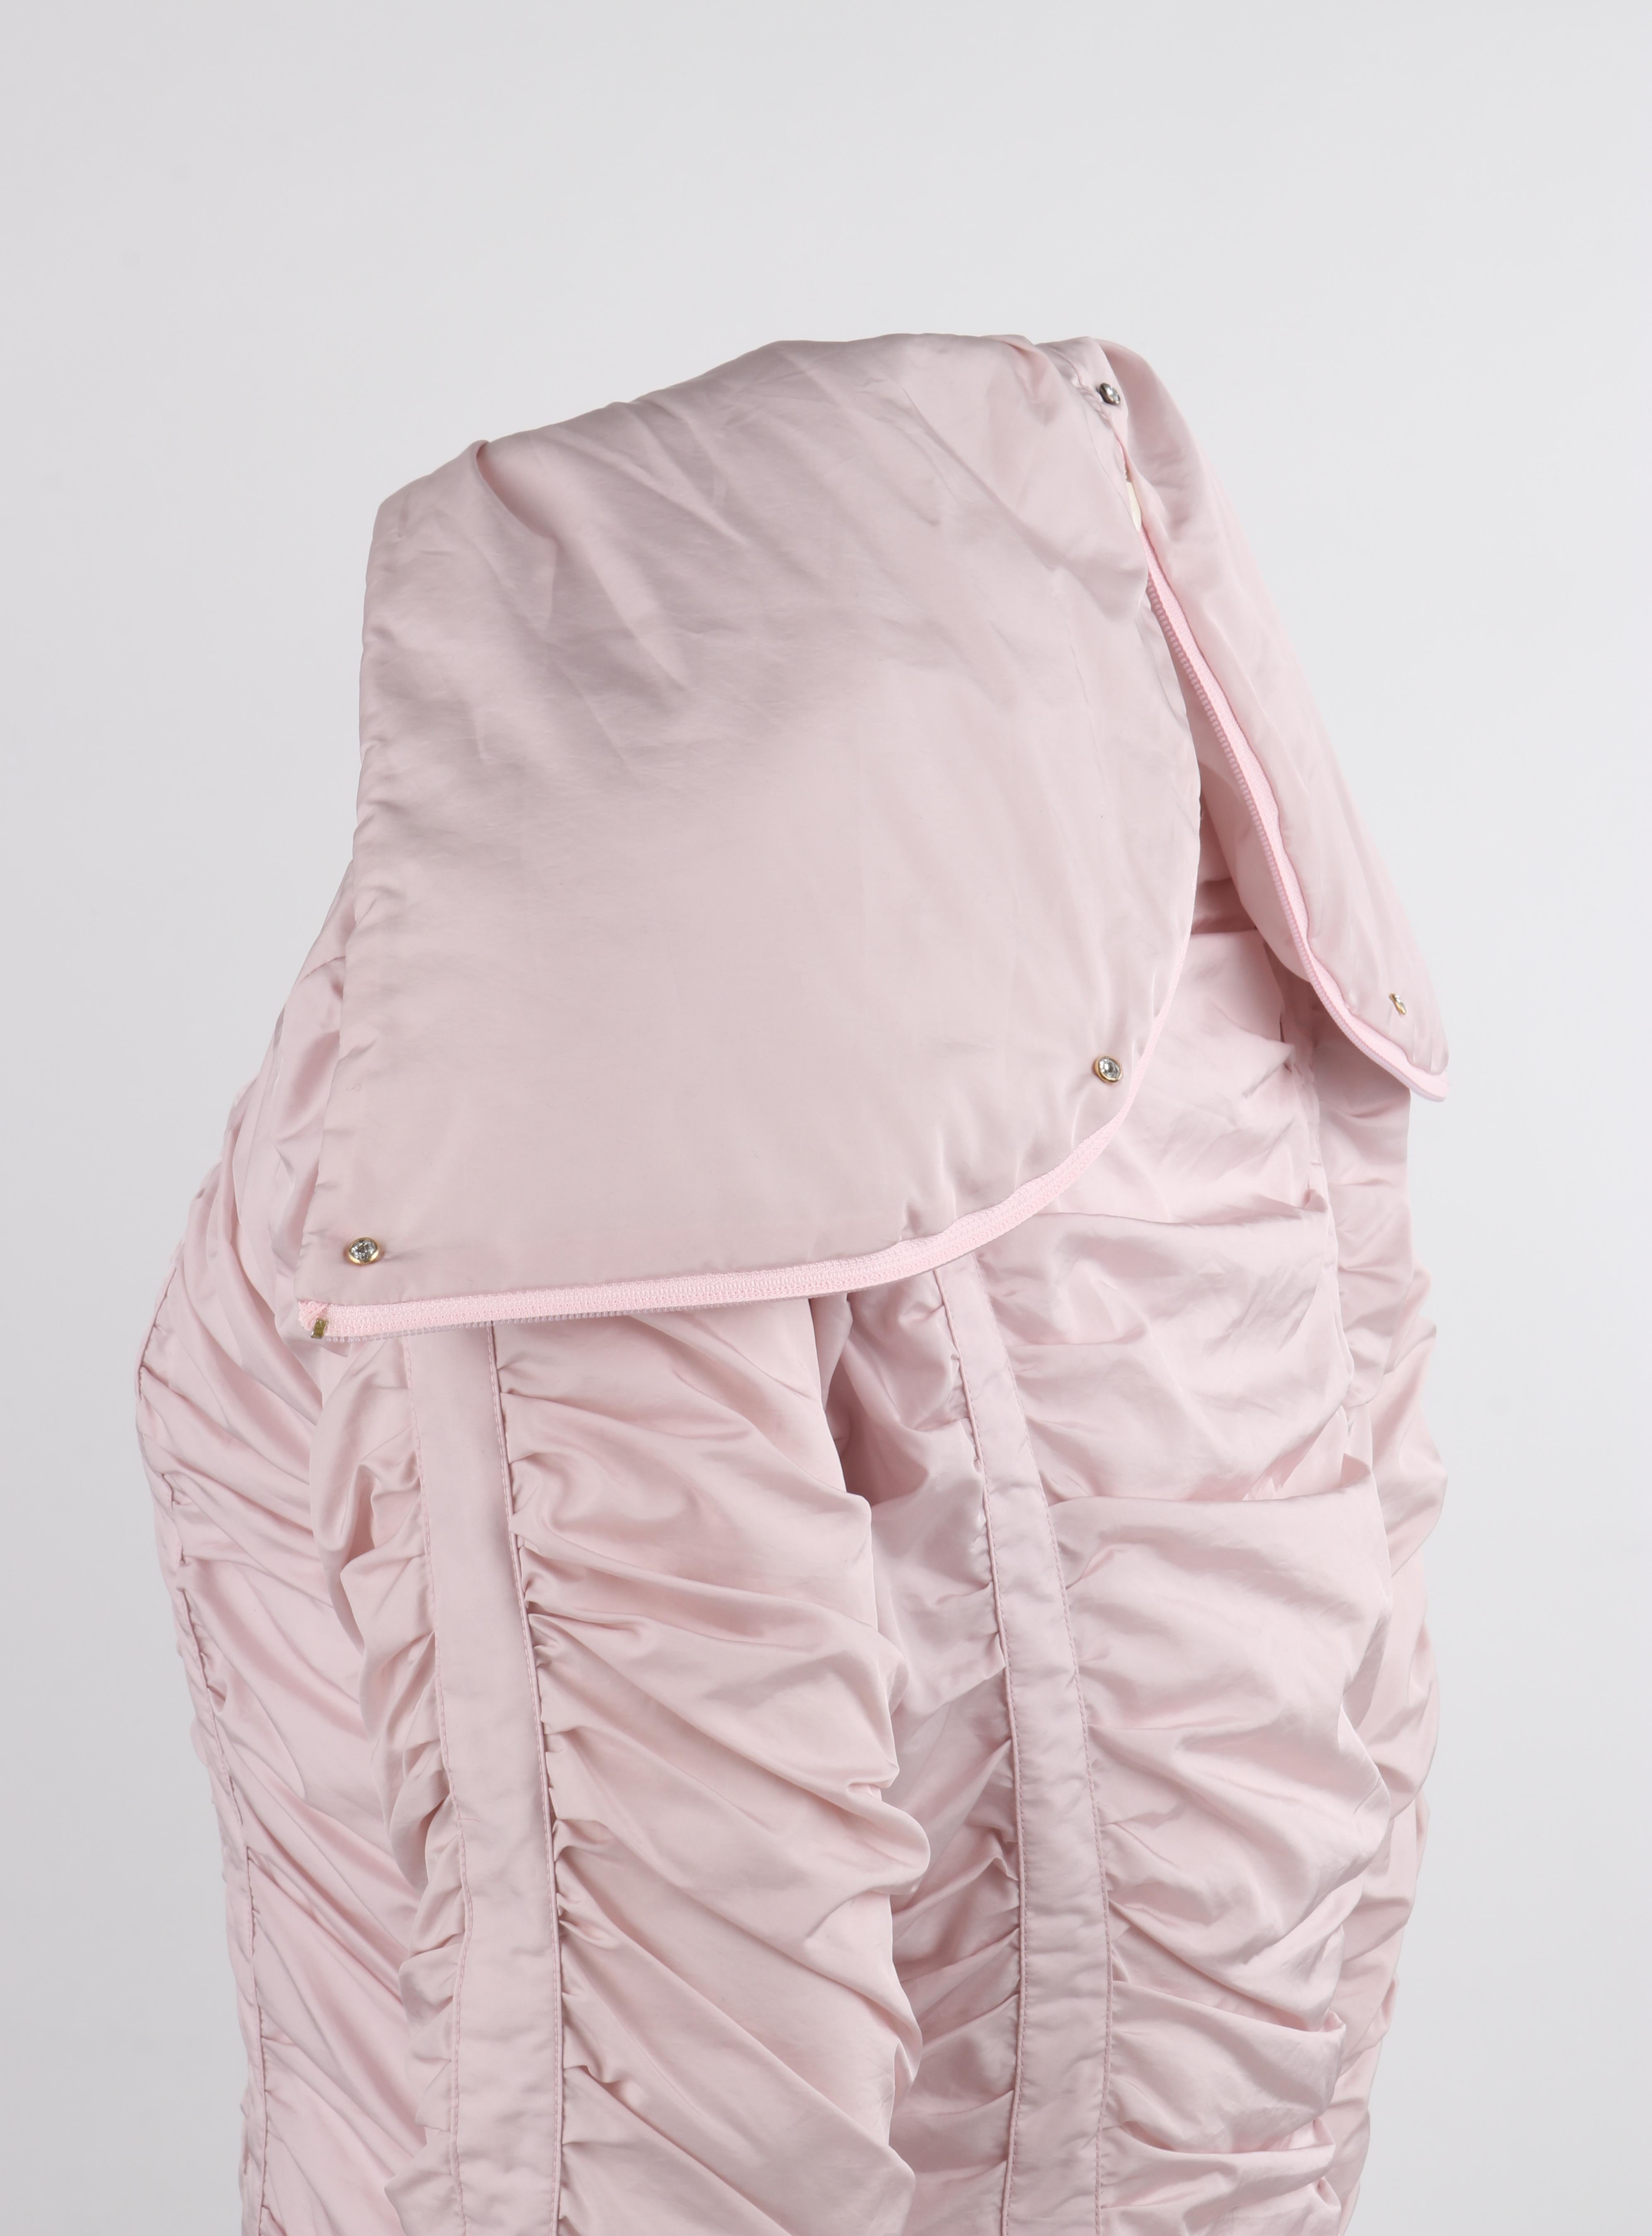 ALEXANDER McQUEEN c.1990's Vtg Pink Ruched Hooded Zip Up Puffer Jacket Coat For Sale 7